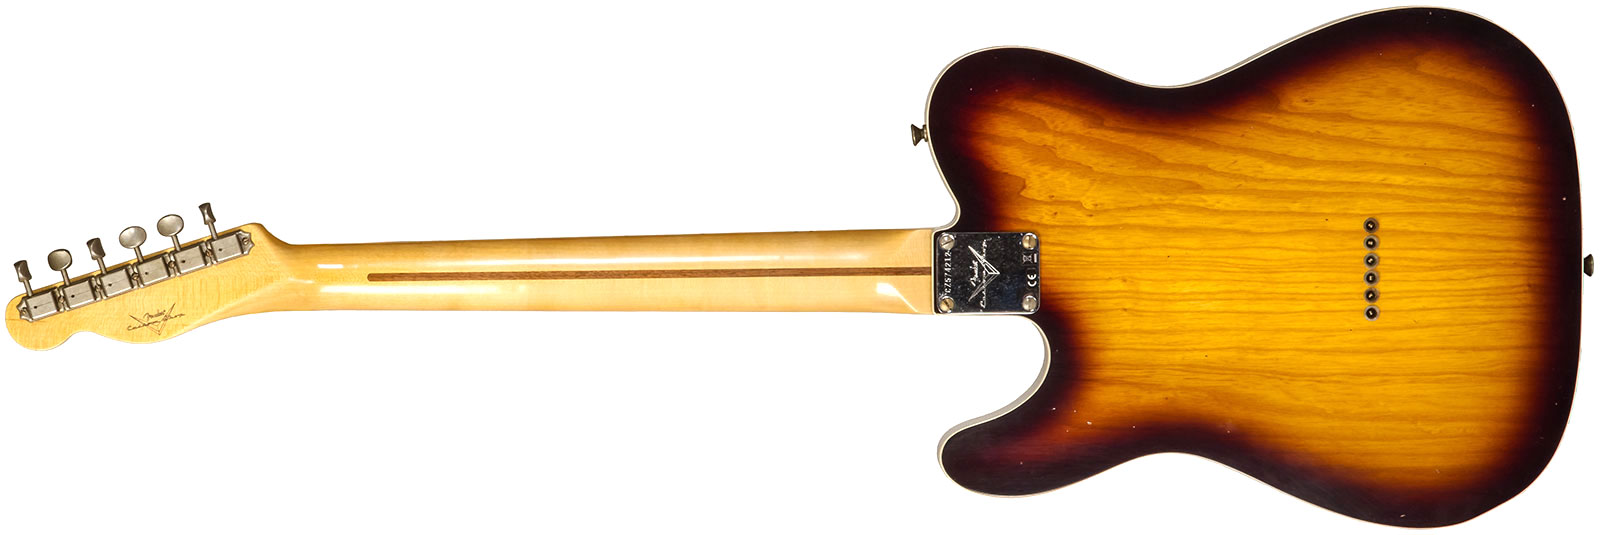 Fender Custom Shop Tele Thinline 50s Mn #cz574212 - Journeyman Relic Aged 2-color Sunburst - Televorm elektrische gitaar - Variation 2